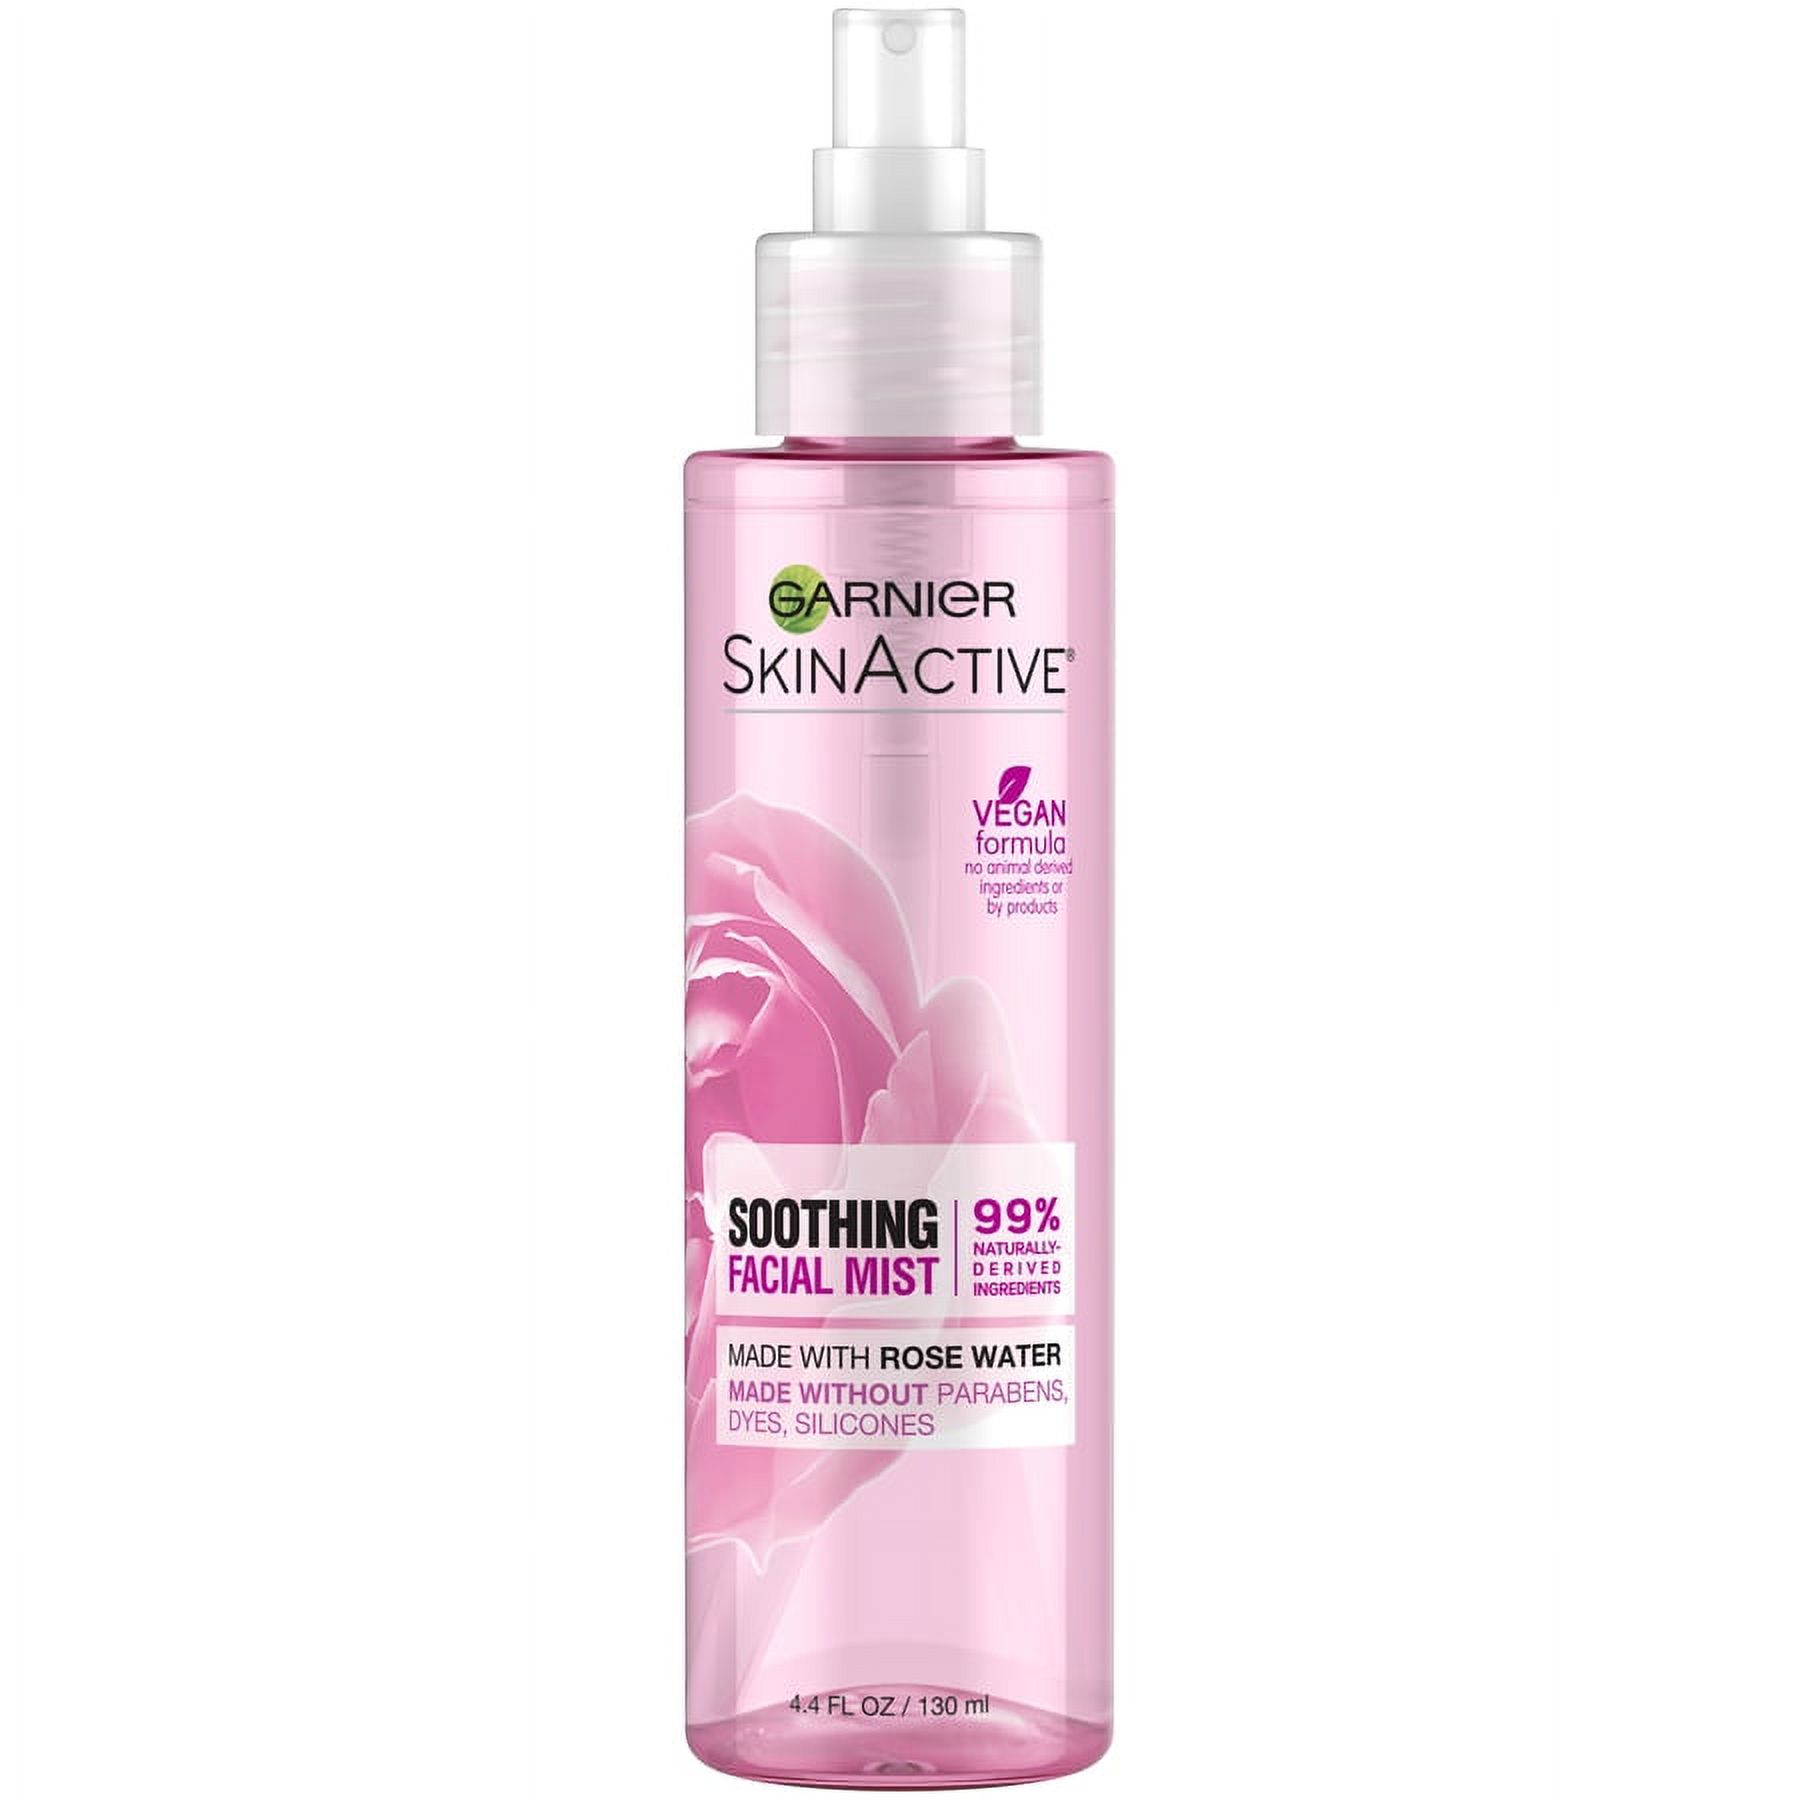 Garnier SkinActive Facial Mist Spray, Rose Water, 4.4 fl oz - image 1 of 11